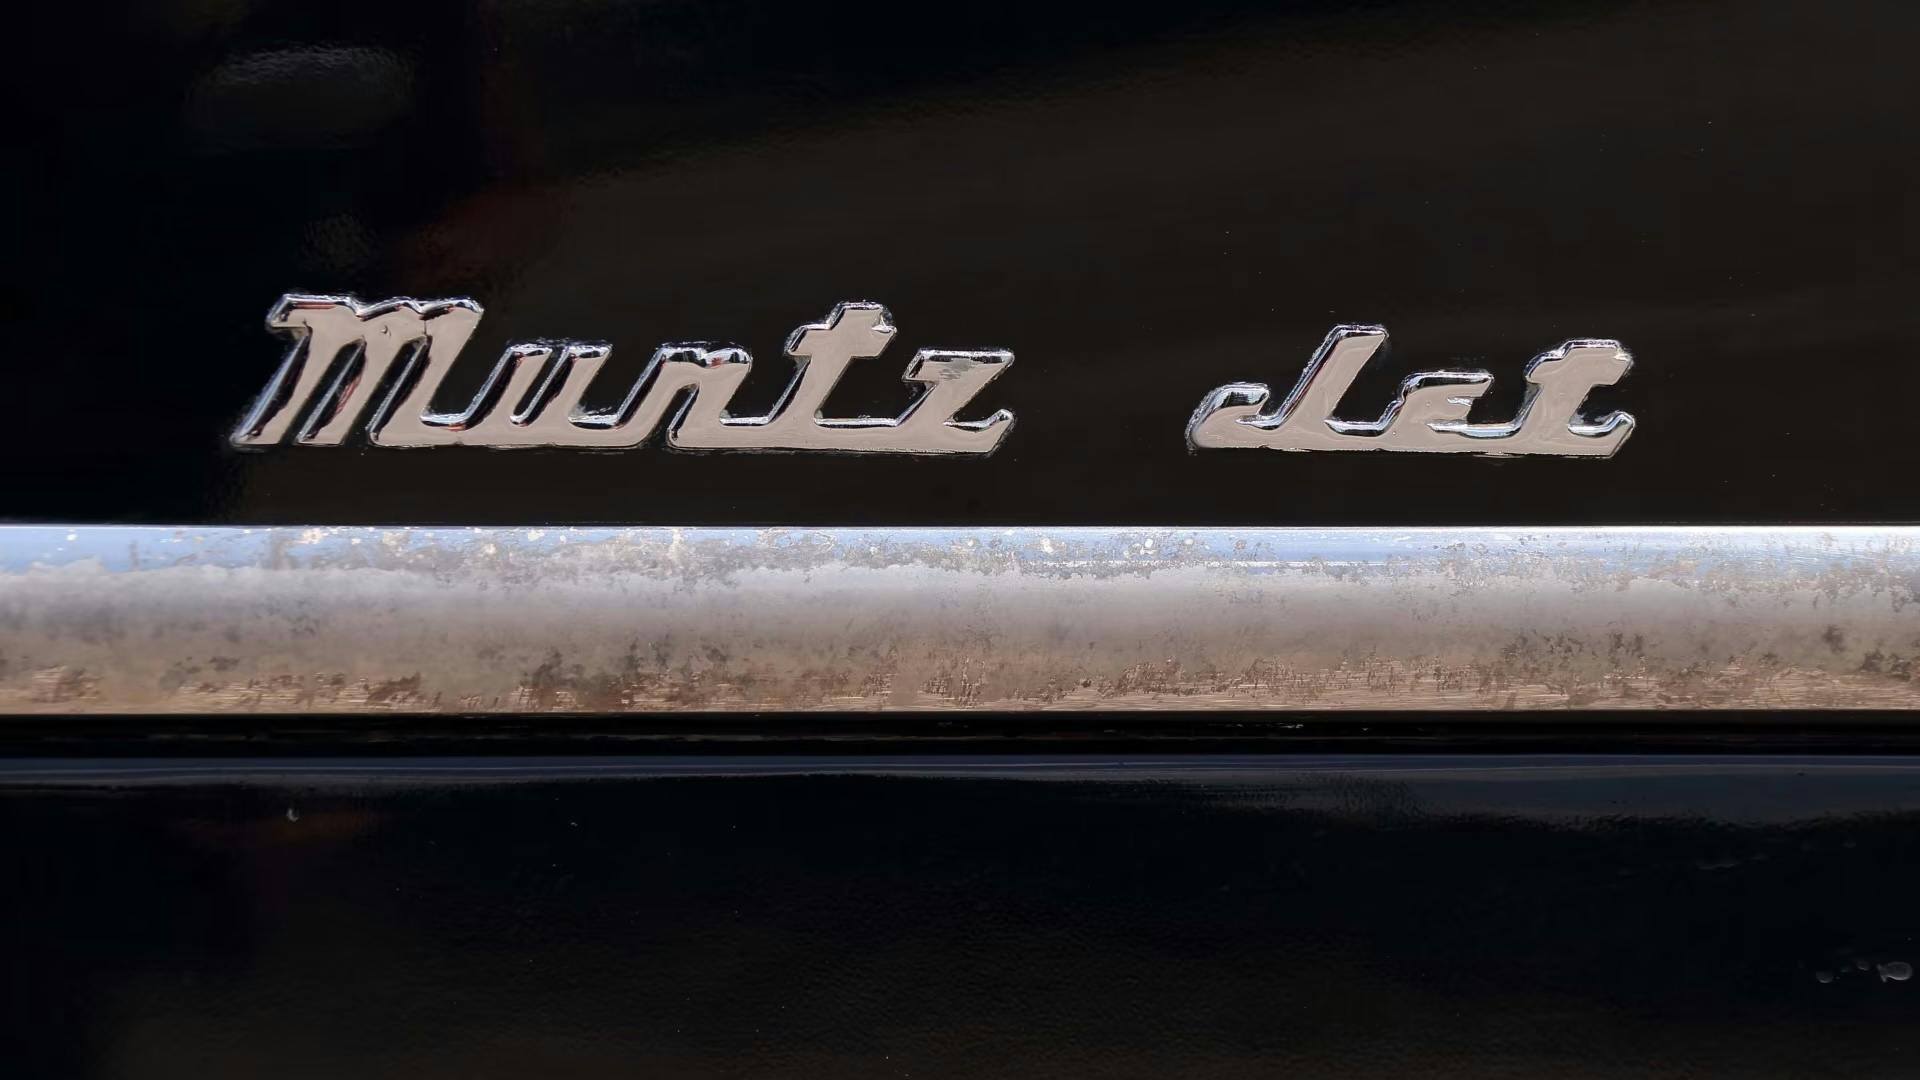 1952 Muntz Jet Convertible badge